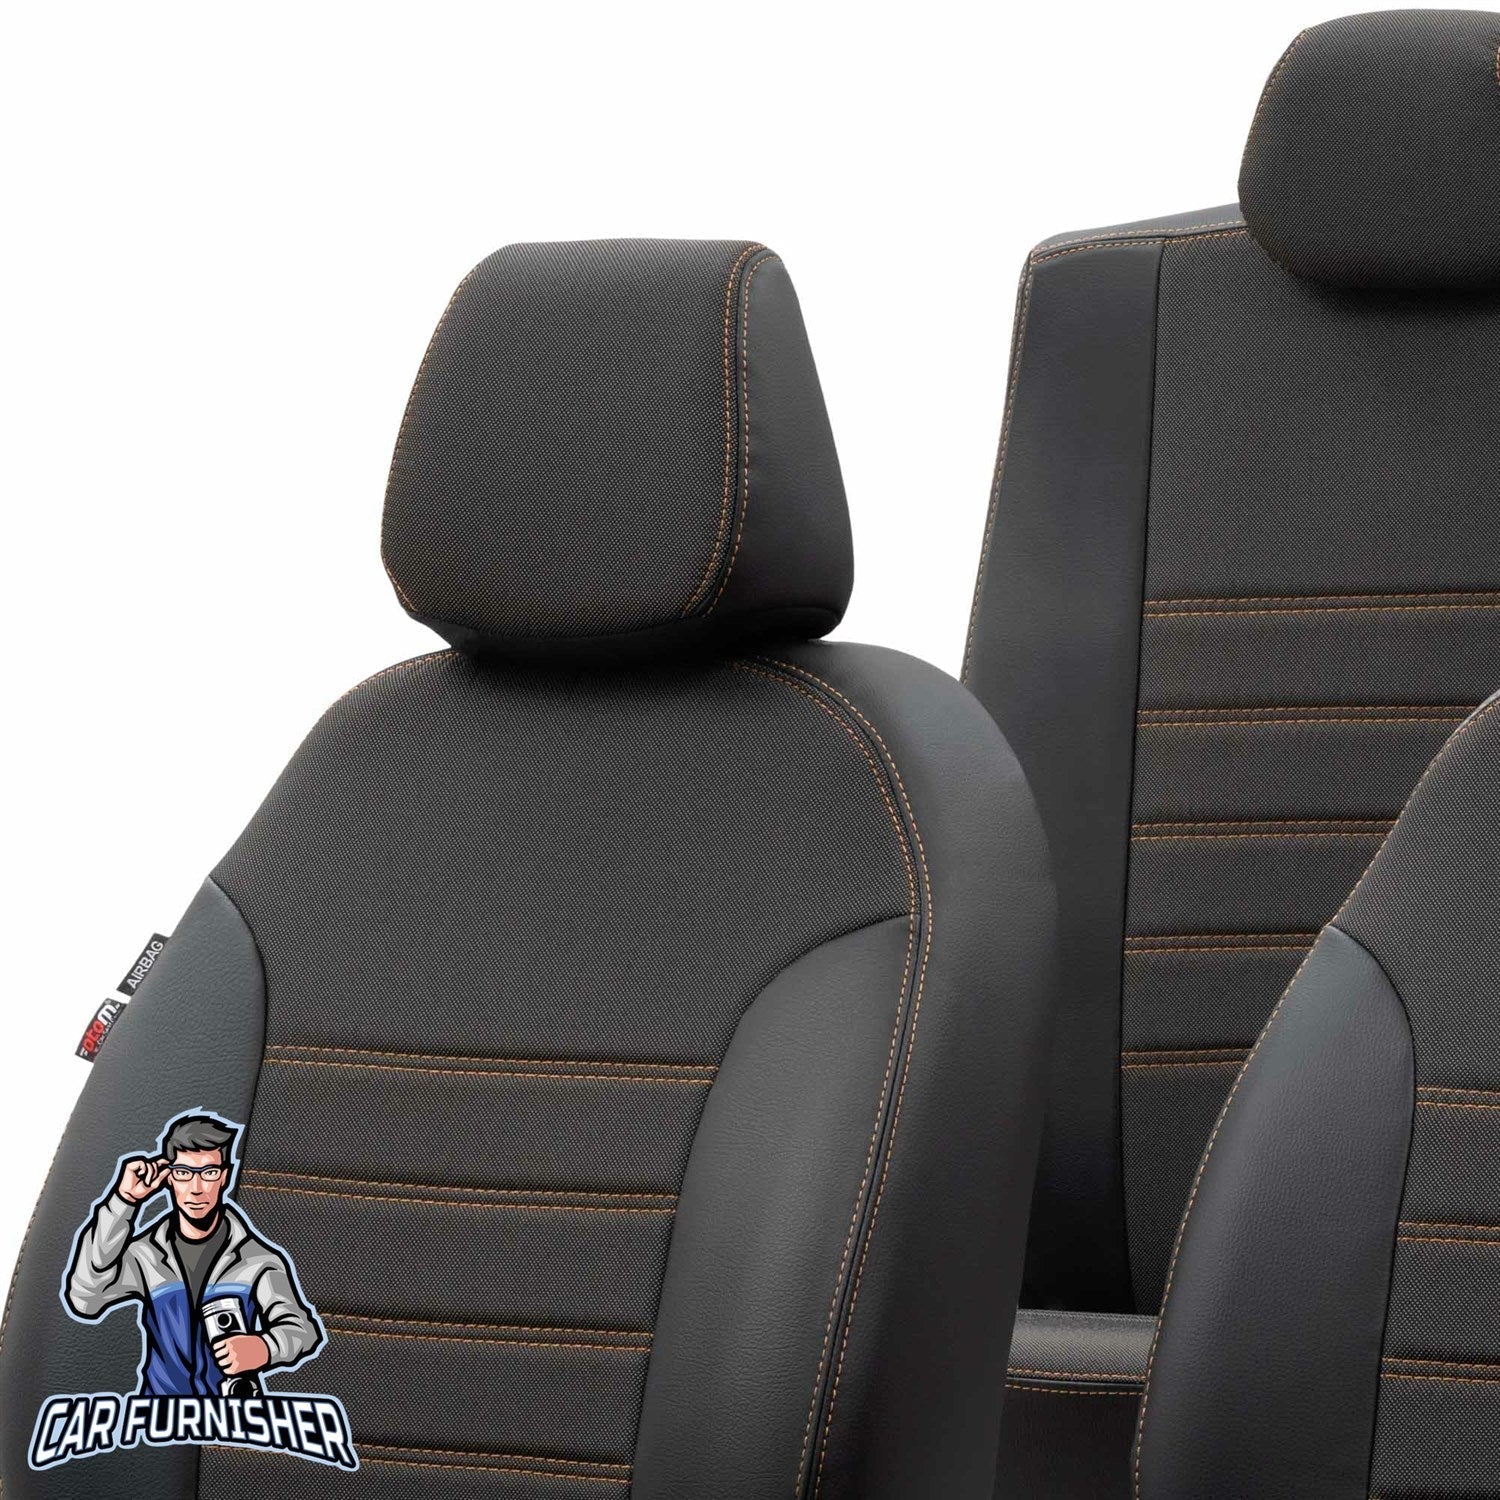 Seat Cordoba Seat Covers Paris Leather & Jacquard Design Dark Beige Leather & Jacquard Fabric